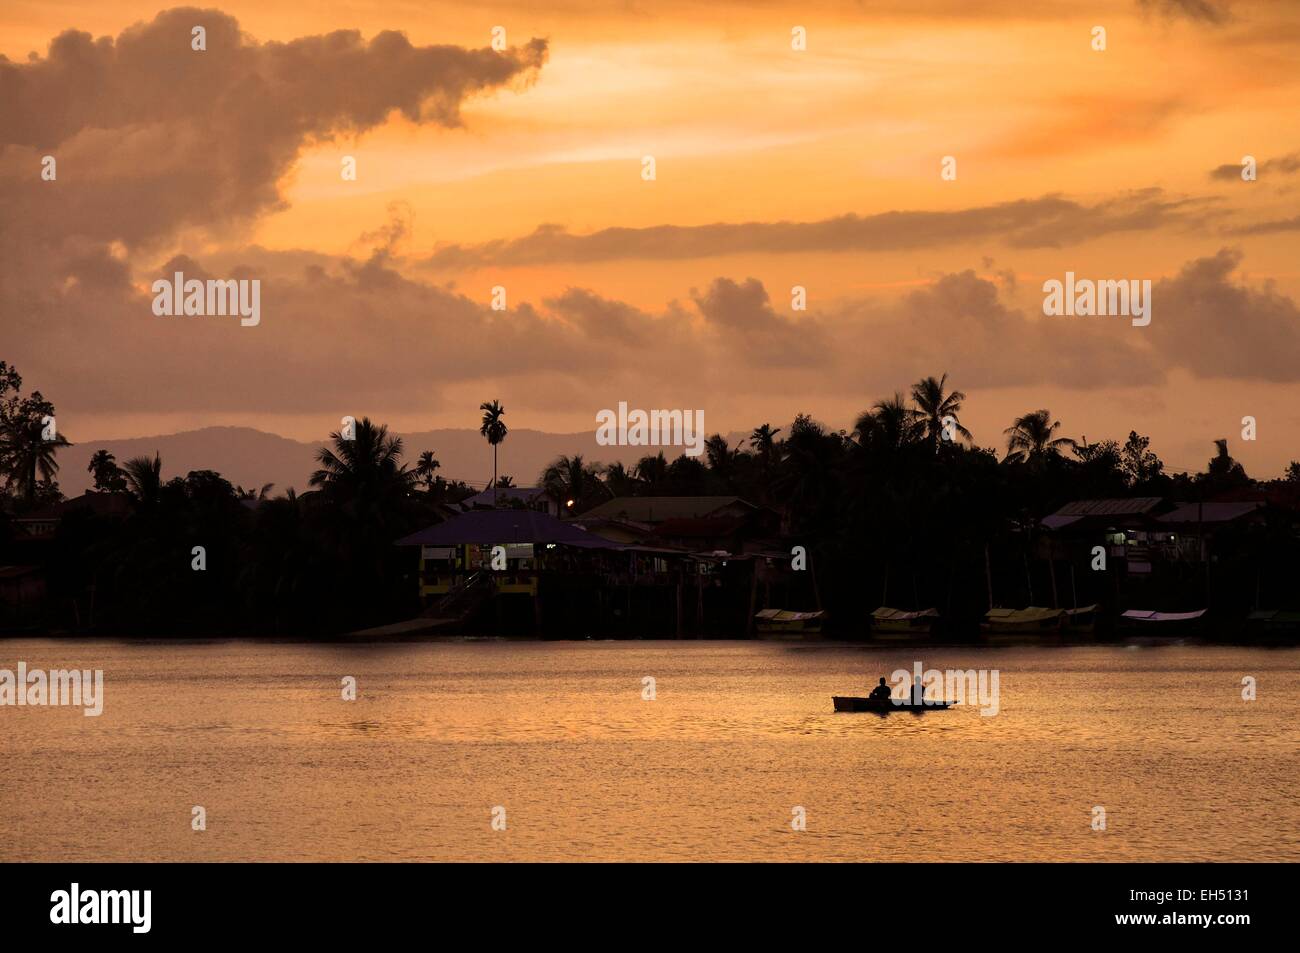 Malasia, Borneo, Sarawak, Kuching, silueta de pescadores en un barco sobre el río Sungai Sarawak al atardecer Foto de stock